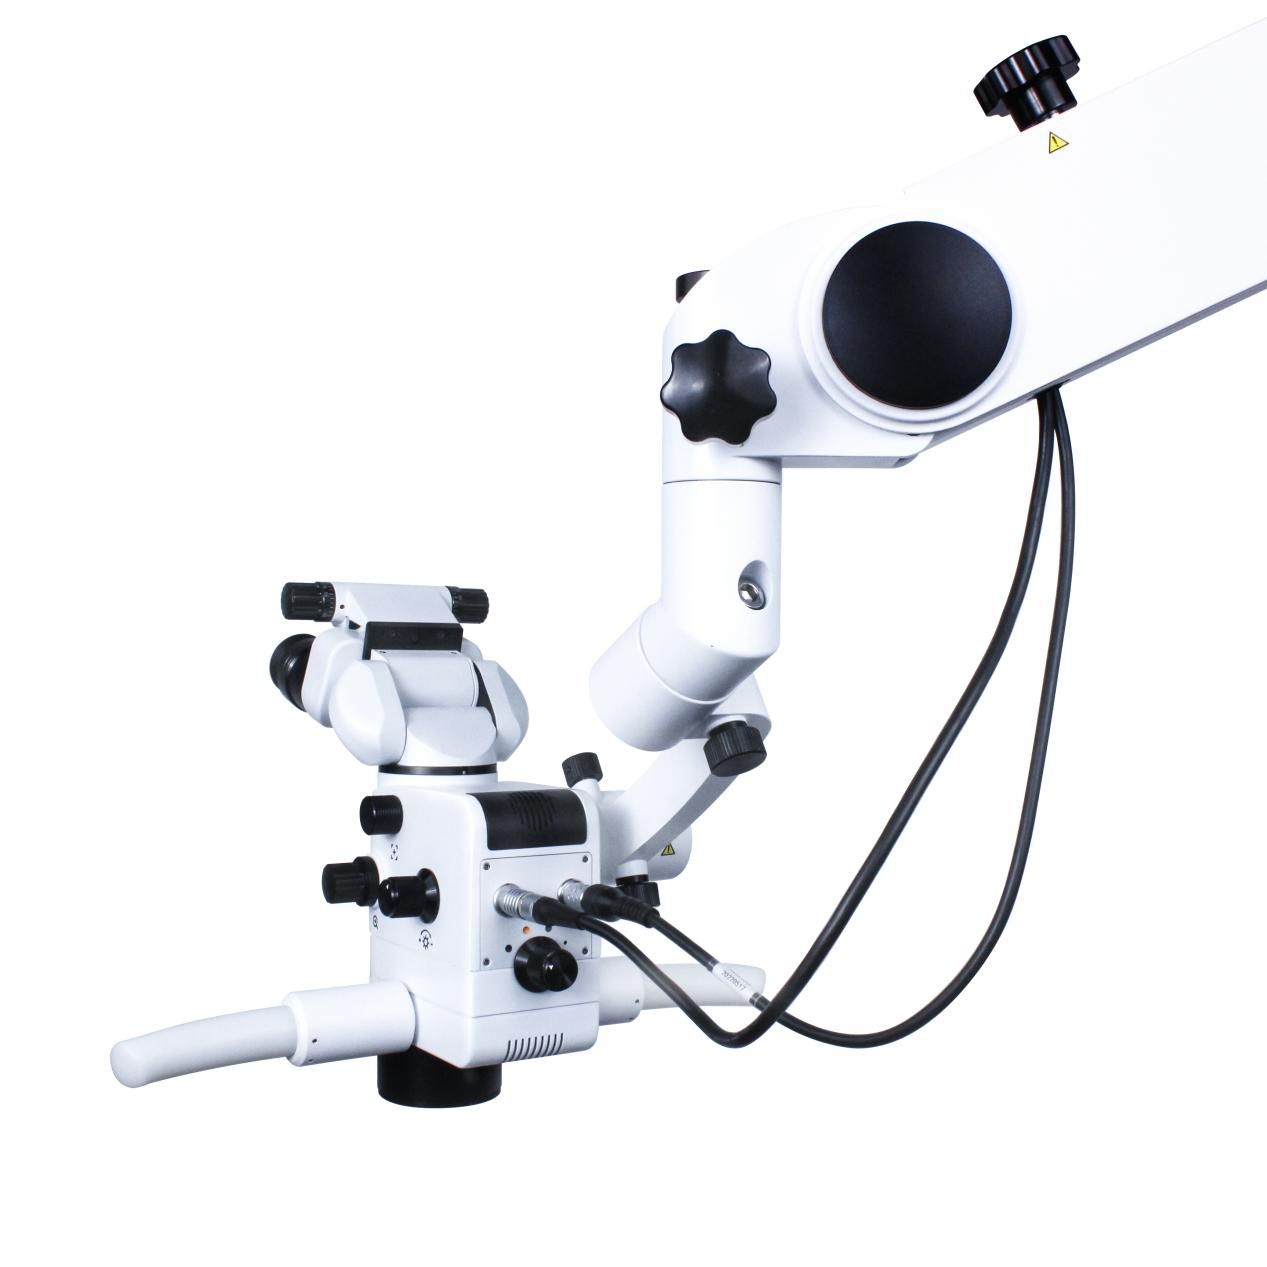 Advanced ASOM surgical microscope optical system